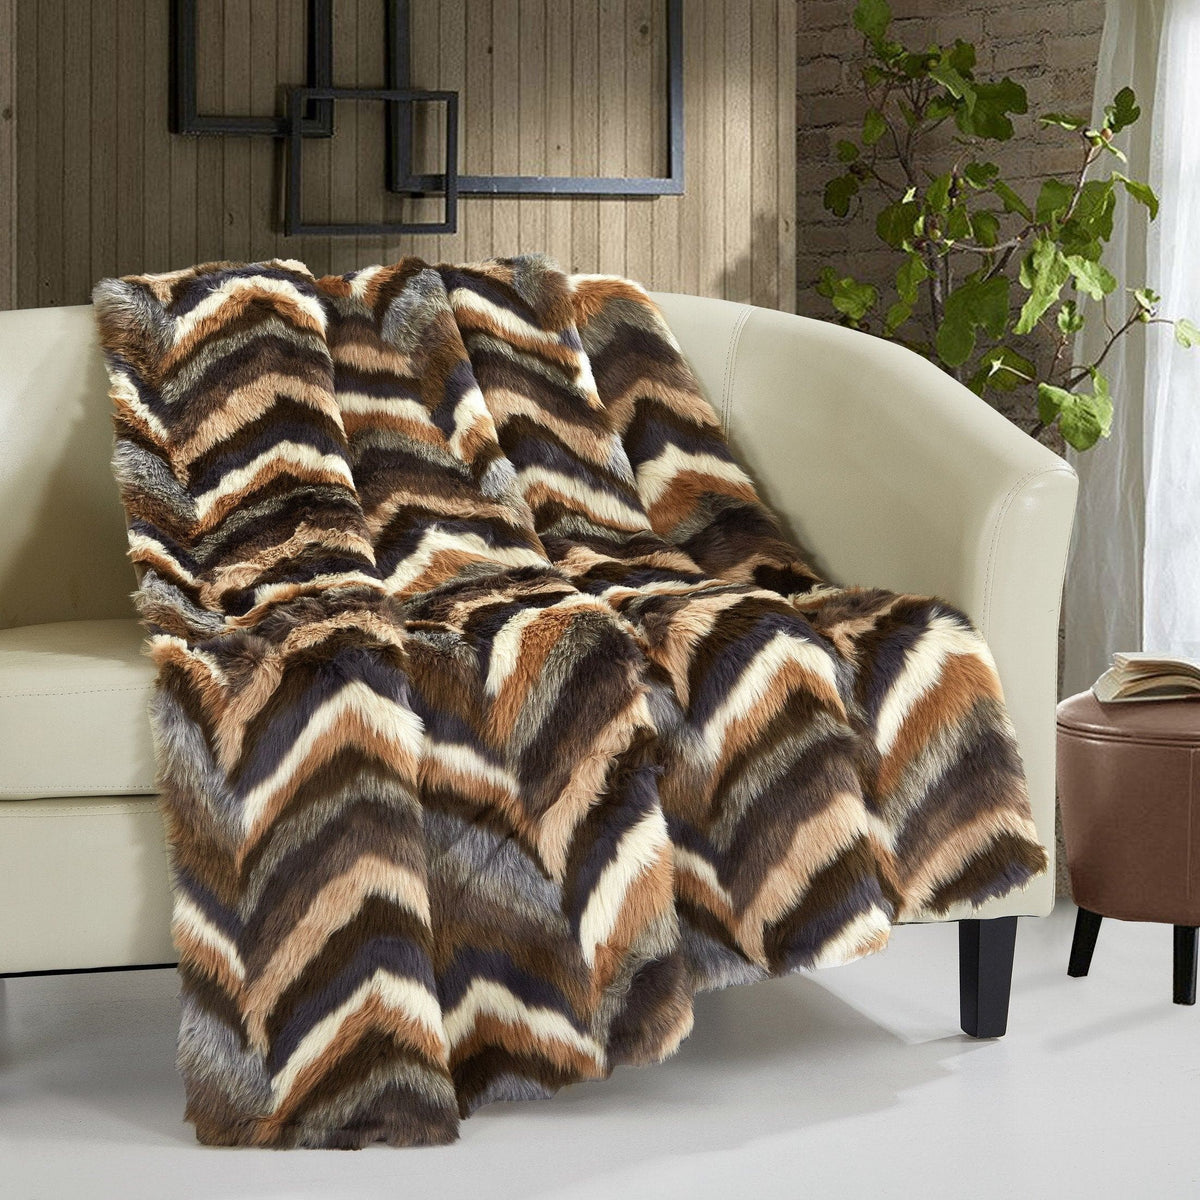 Chic Home Orna Throw Blanket Striped Chevron Shaggy Faux Fur Design Brown